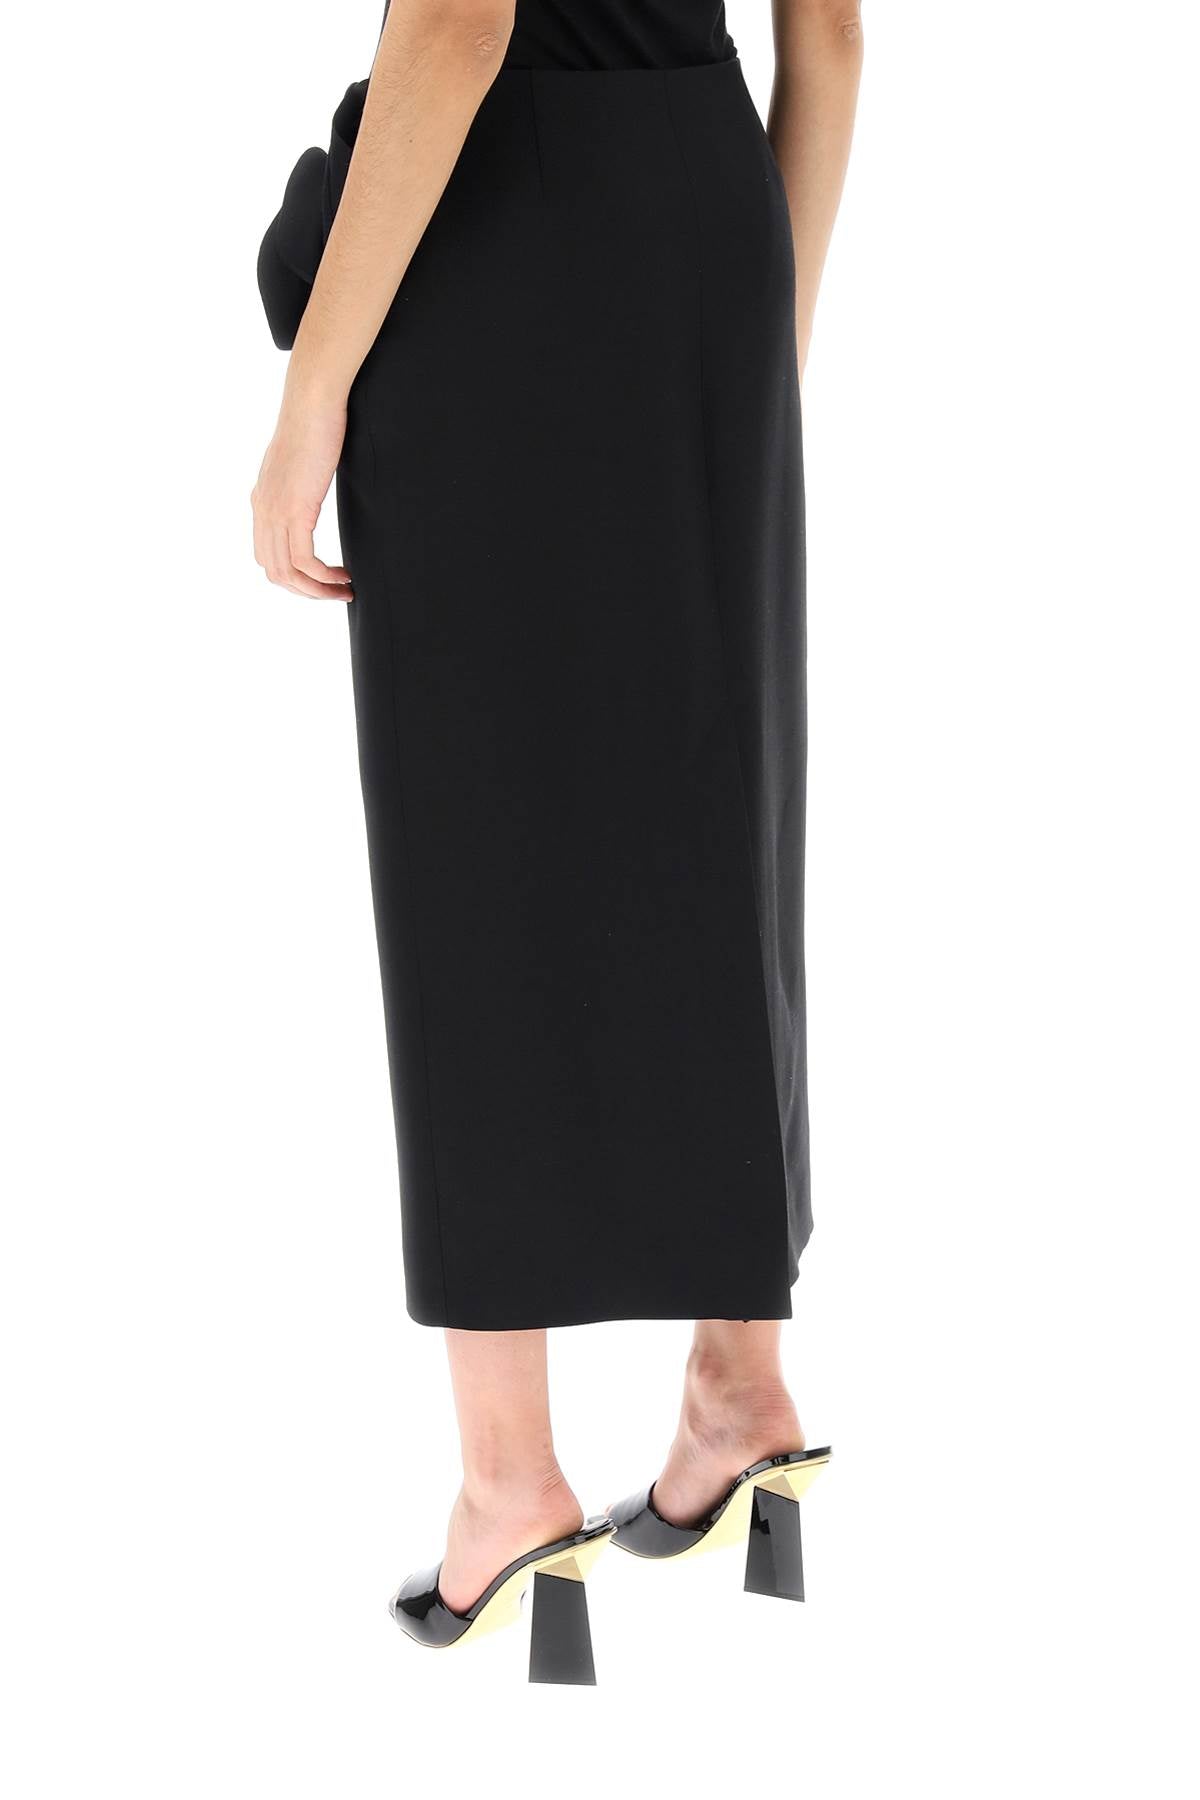 VALENTINO GARAVANI Elegant Black Crepe Couture Pencil Skirt with 3D Rose Appliqués